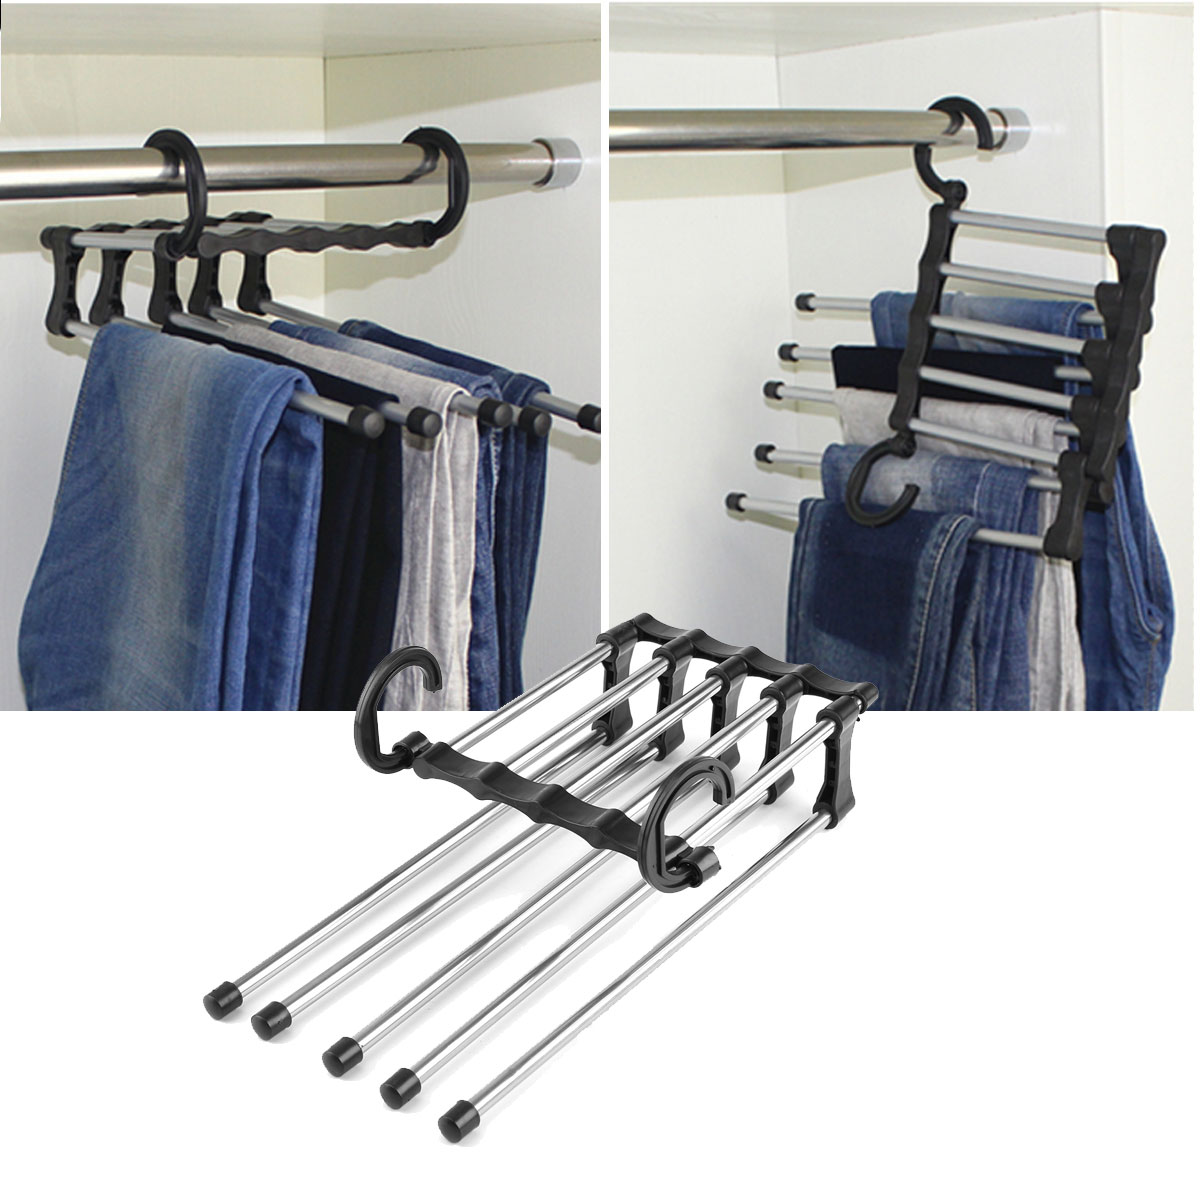 New-5in1-Adjustable-Closet-Organizer-Space-Saver-Trousers-Pants-Rack-Hanger-Hook-1756985-1